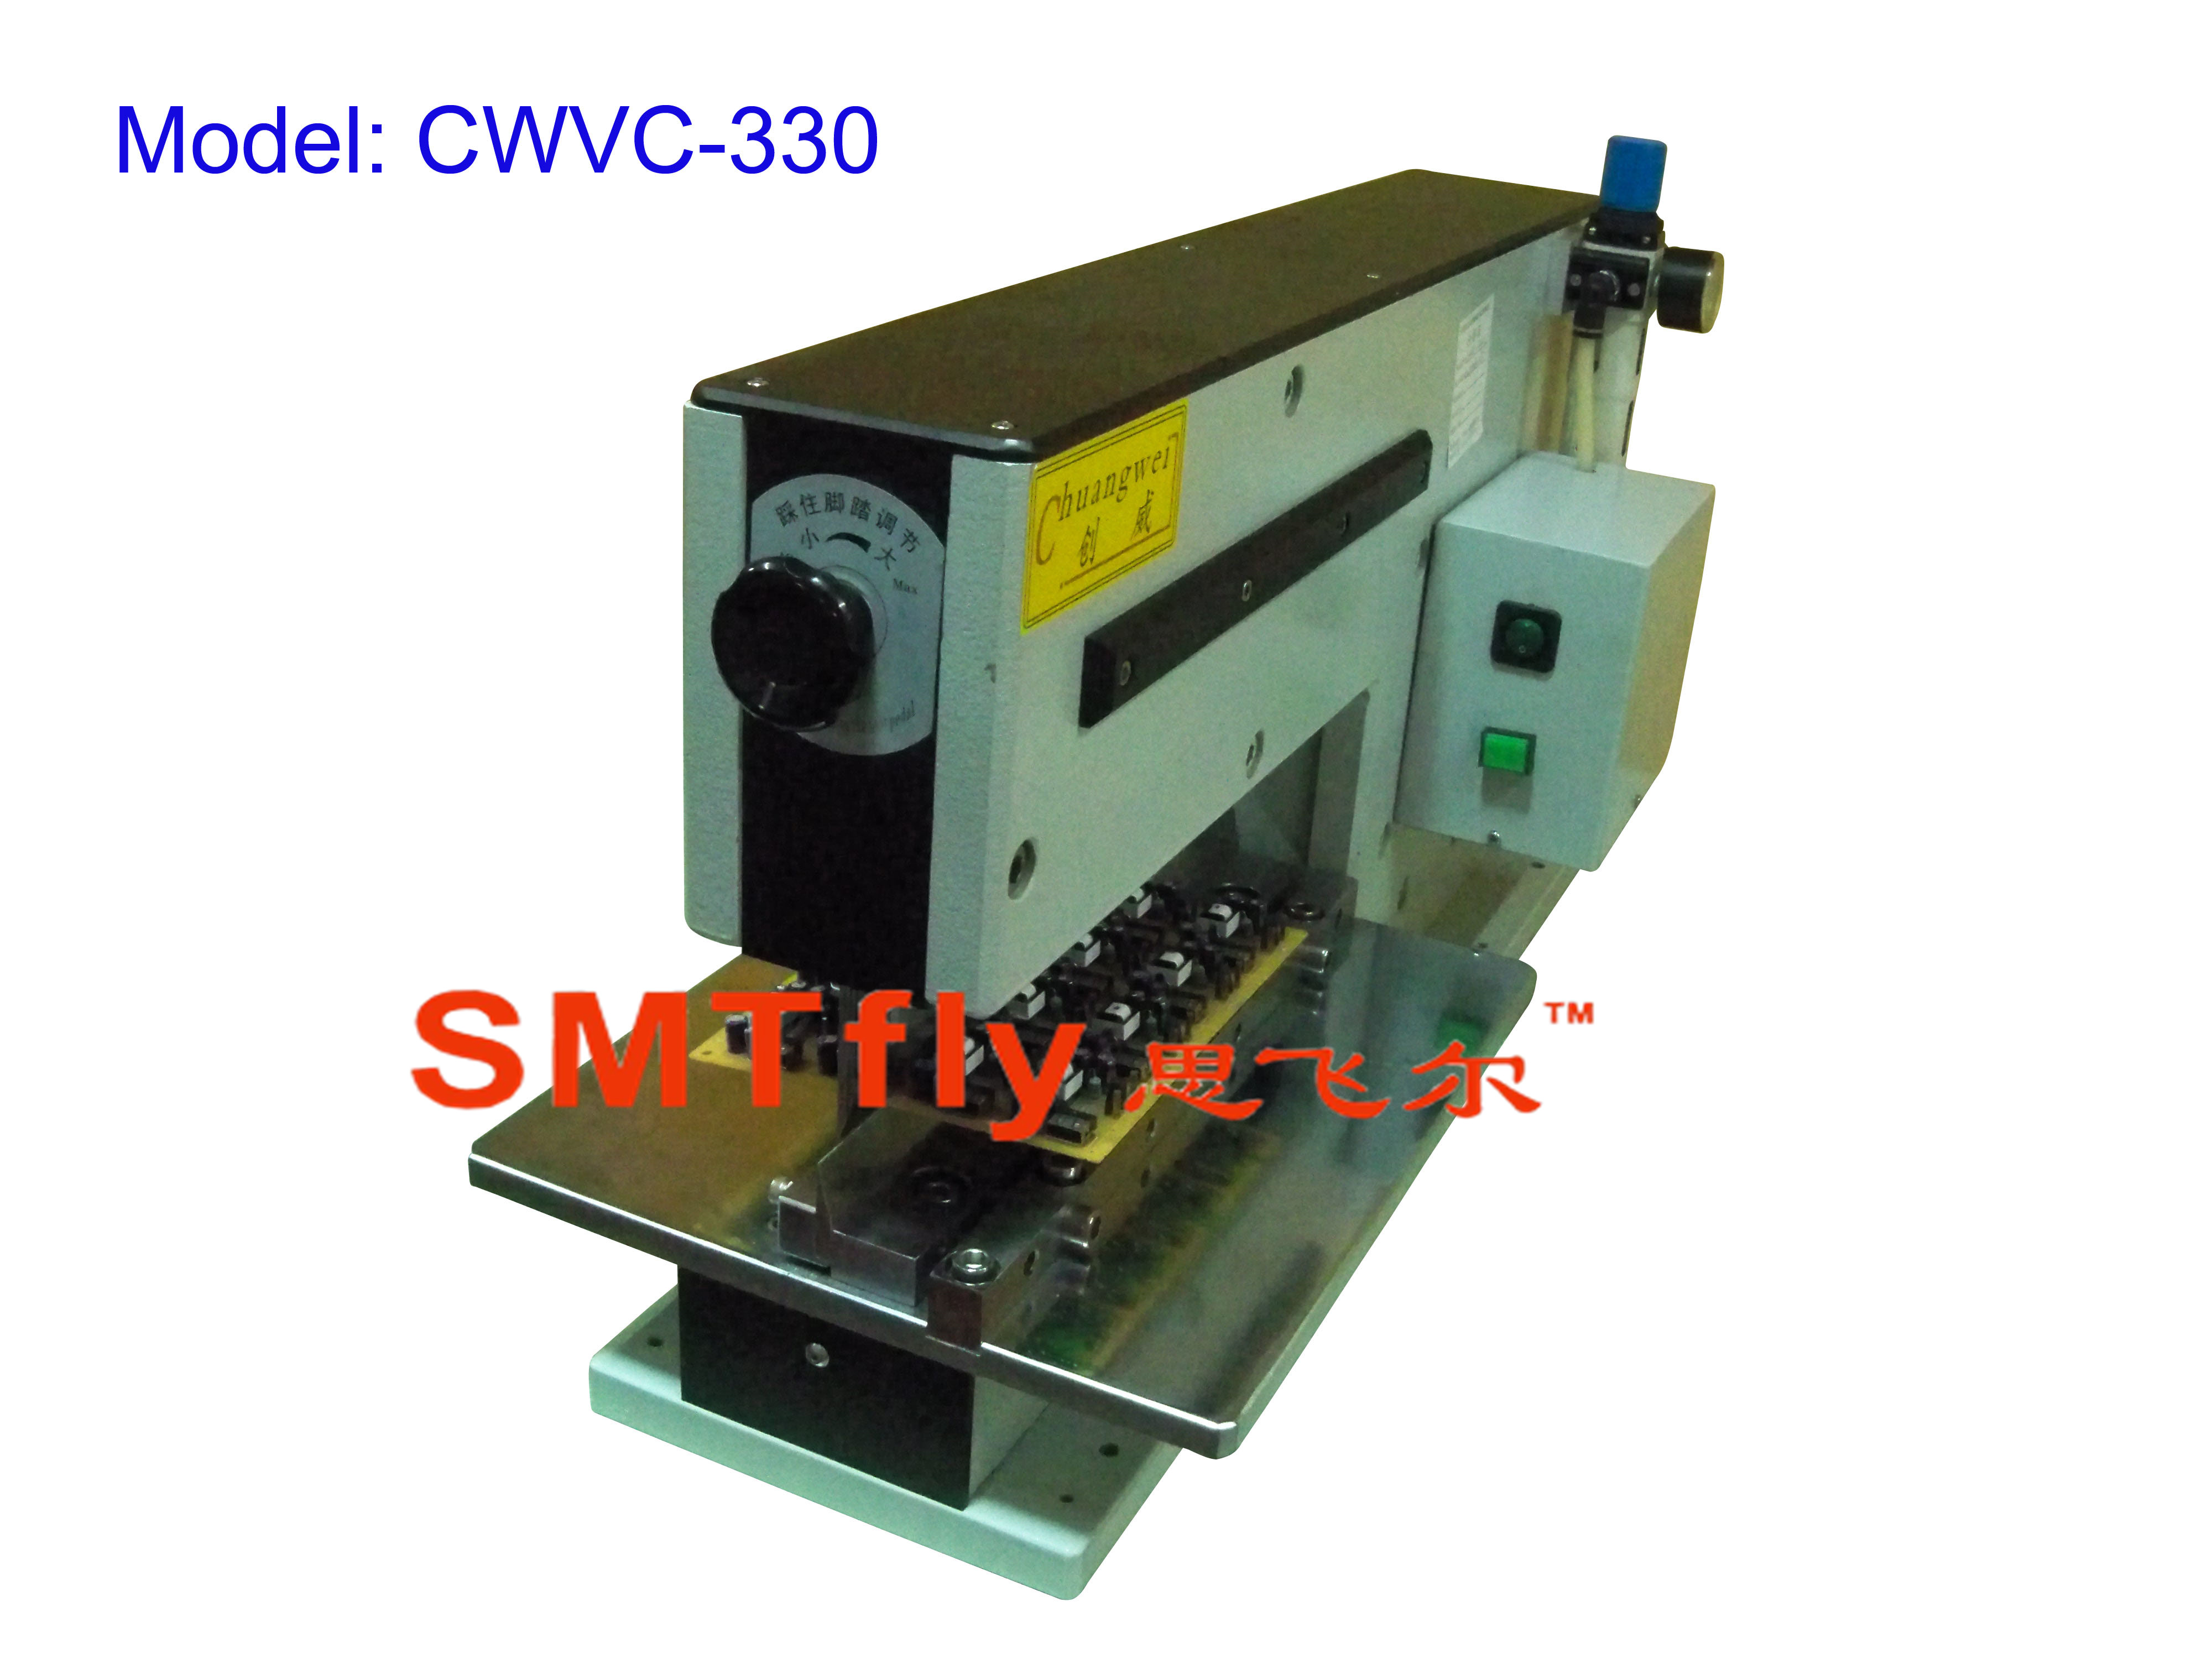 Pneumatic PCB Depaneling,SMTfly-330J